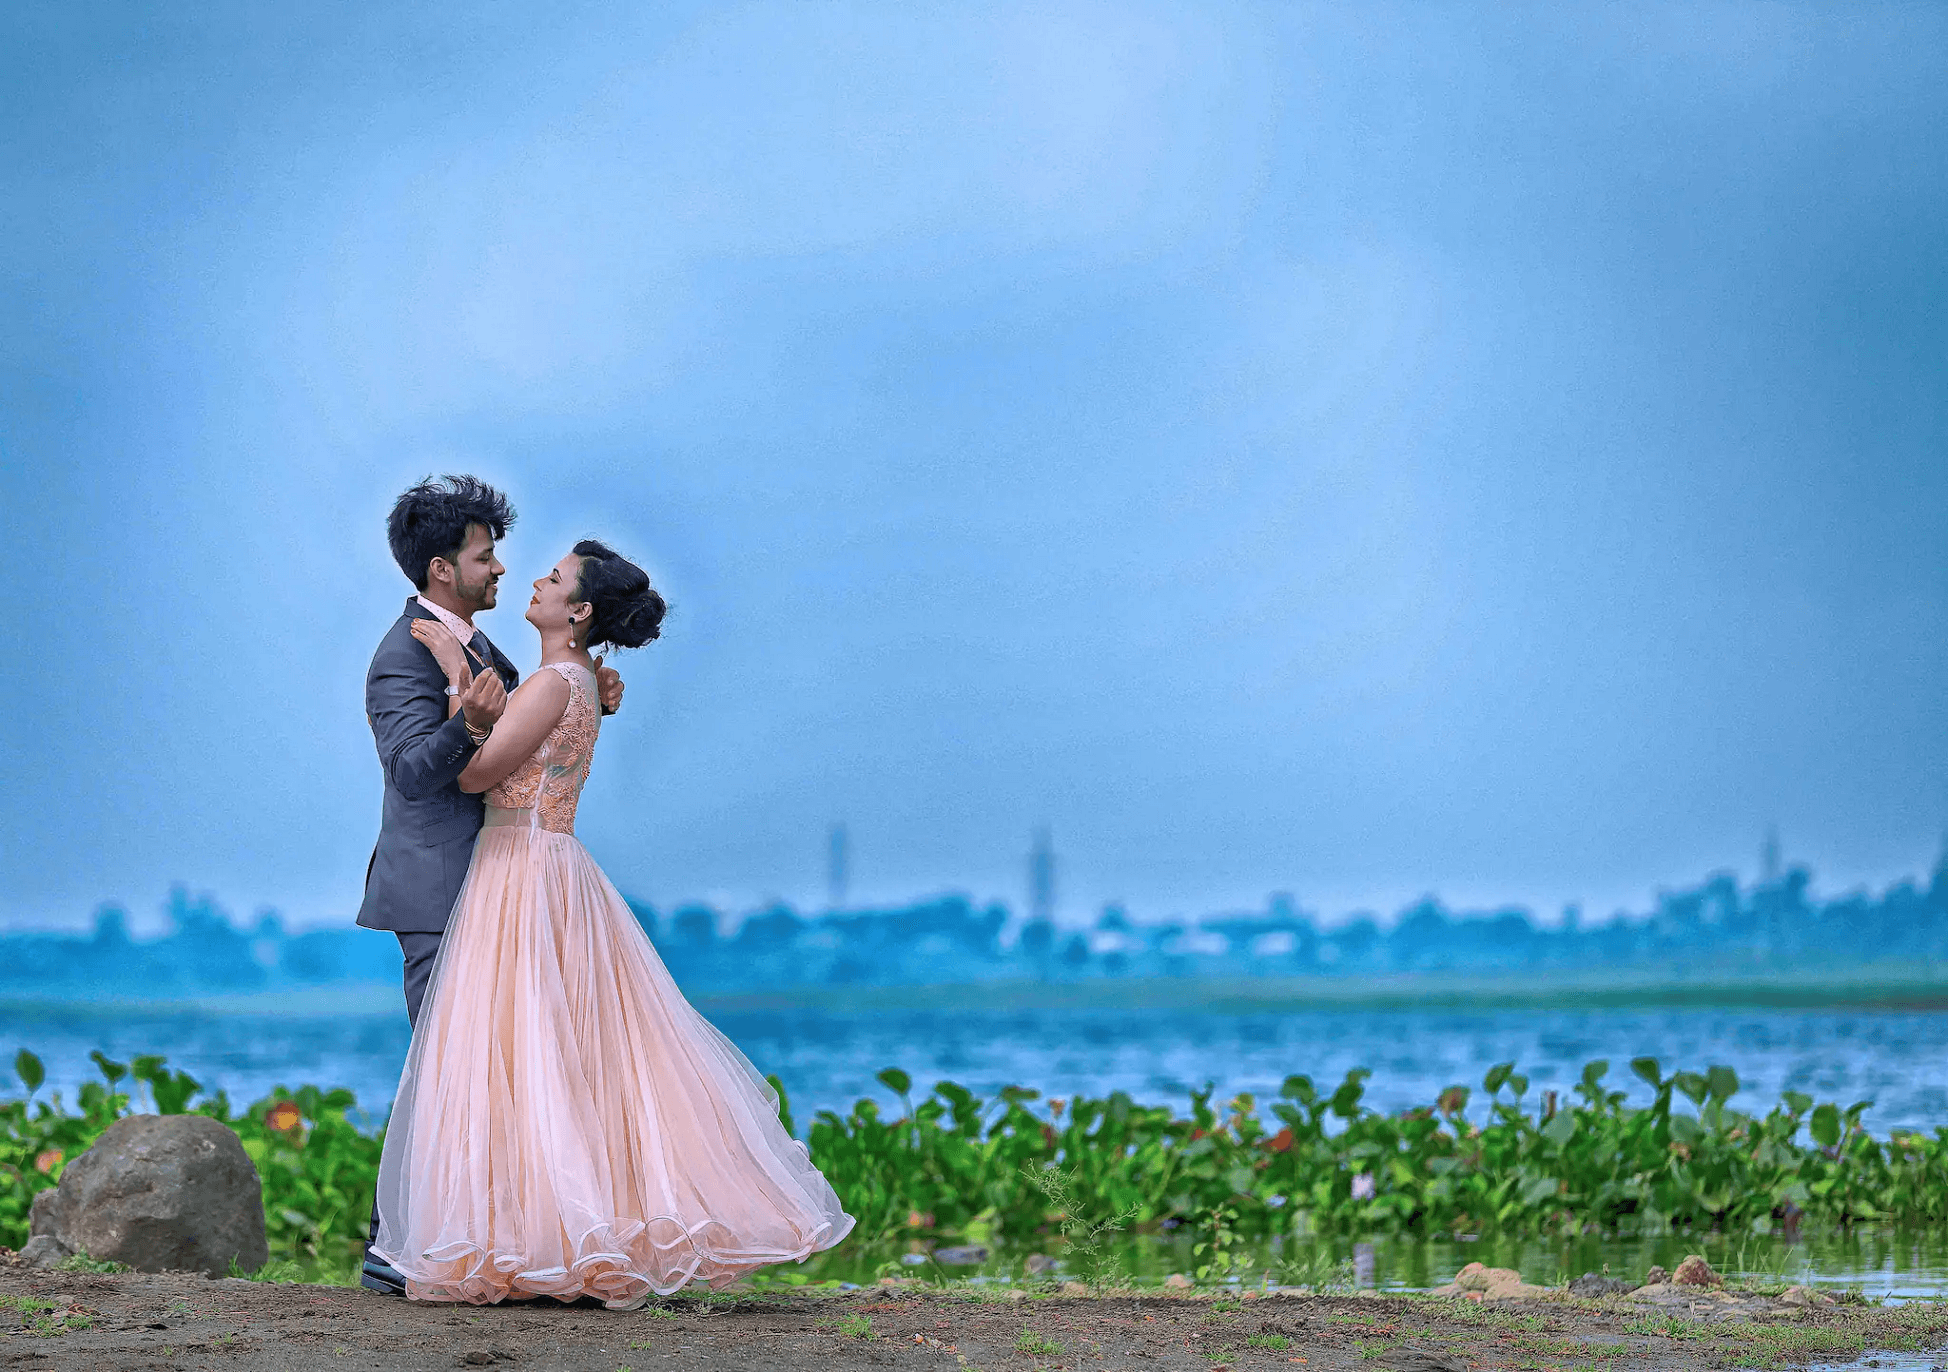 Ecstatic Resort Wedding of a Classy Couple in Designer Ensembles | Couple  wedding dress, Wedding photoshoot poses, Indian wedding photography